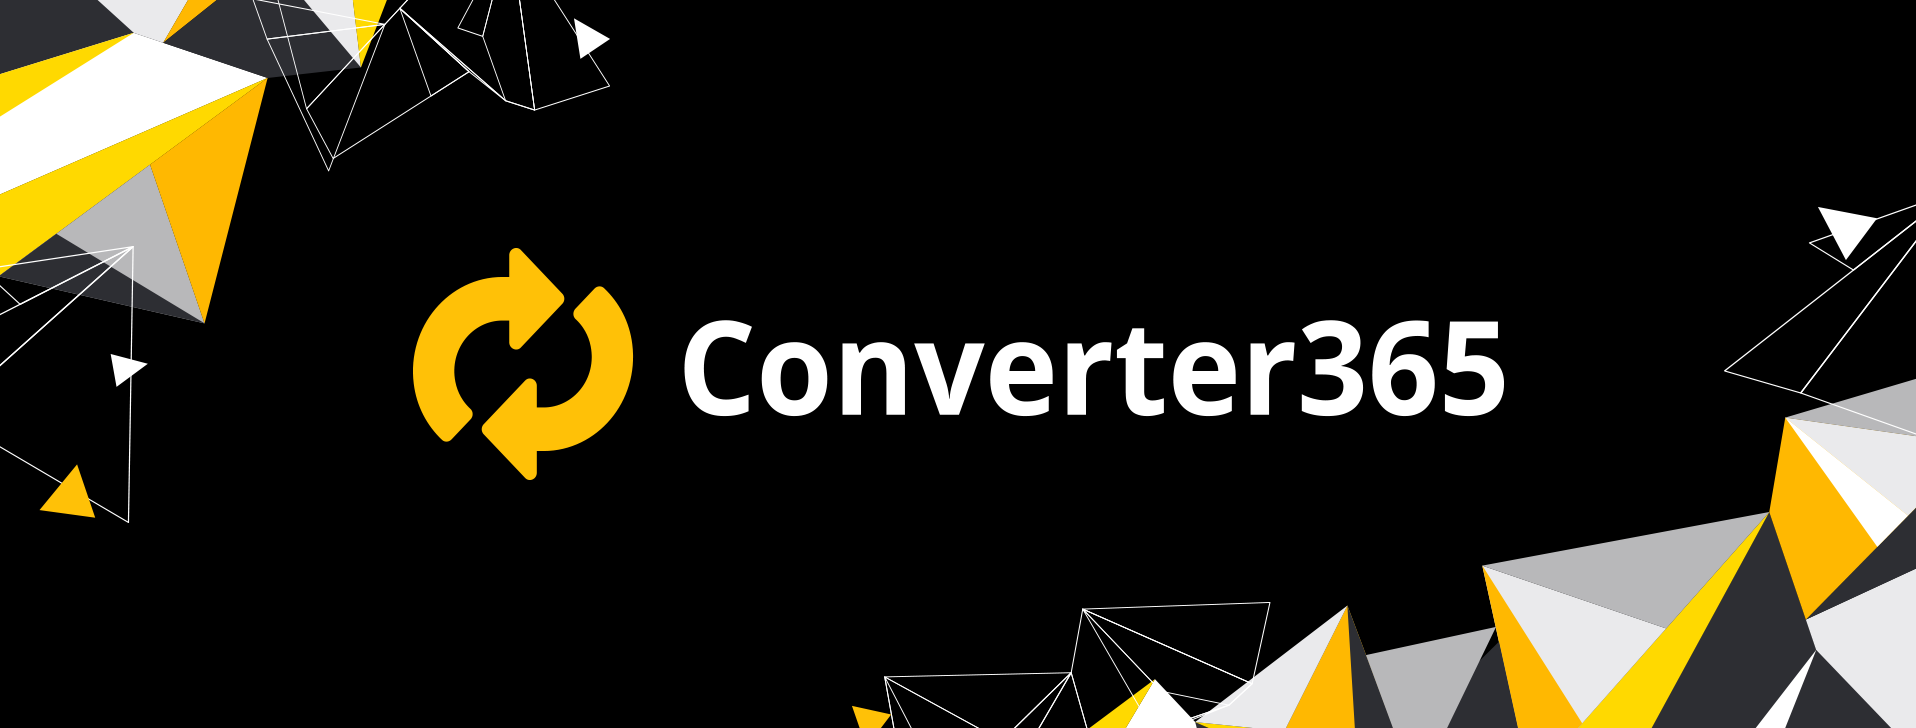 Meet one-year-old Converter365 - the best free online converter